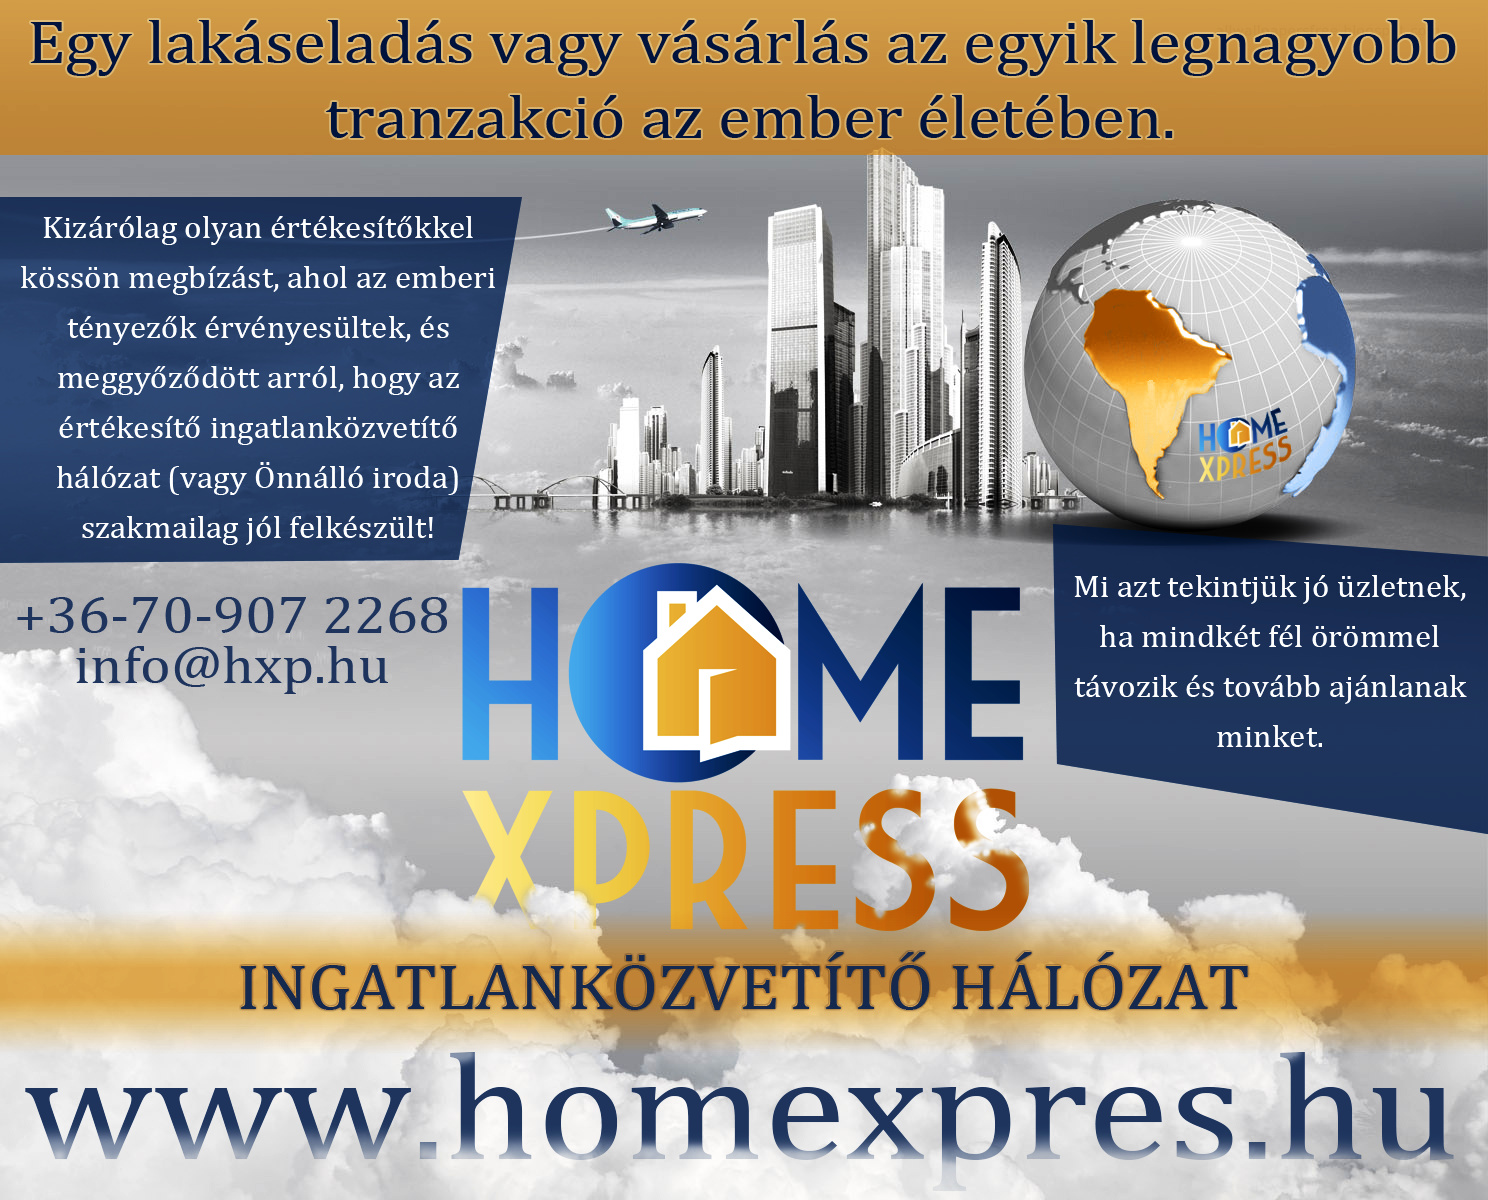 -egy-lakaseladas-homexpress-ingatlankozvetito-halozat-budapest.p